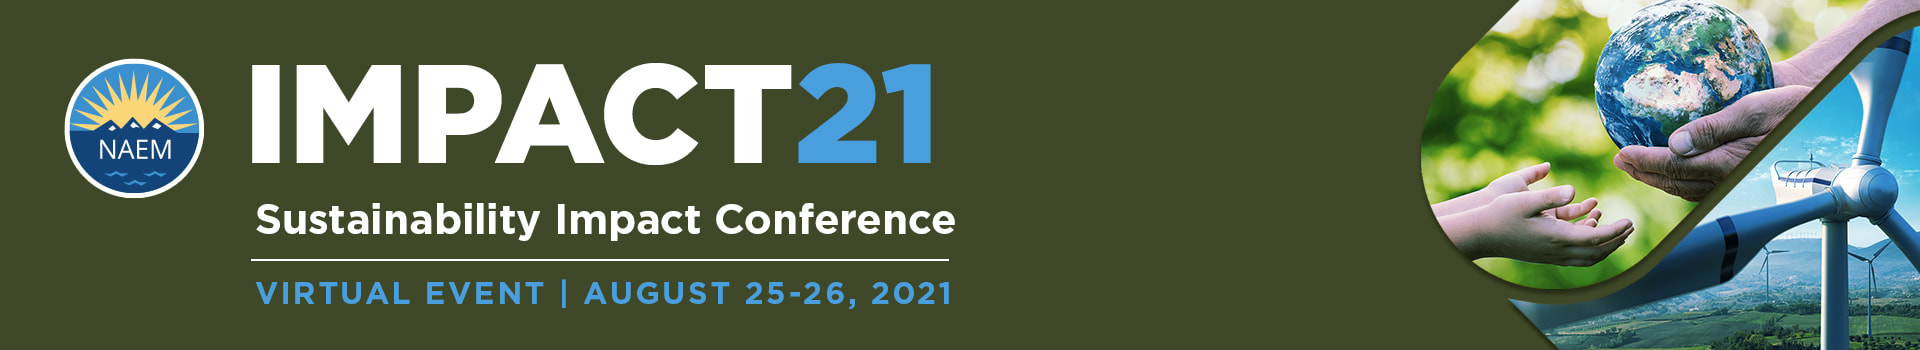 IMPACT21 | Sustainability Impact Conference